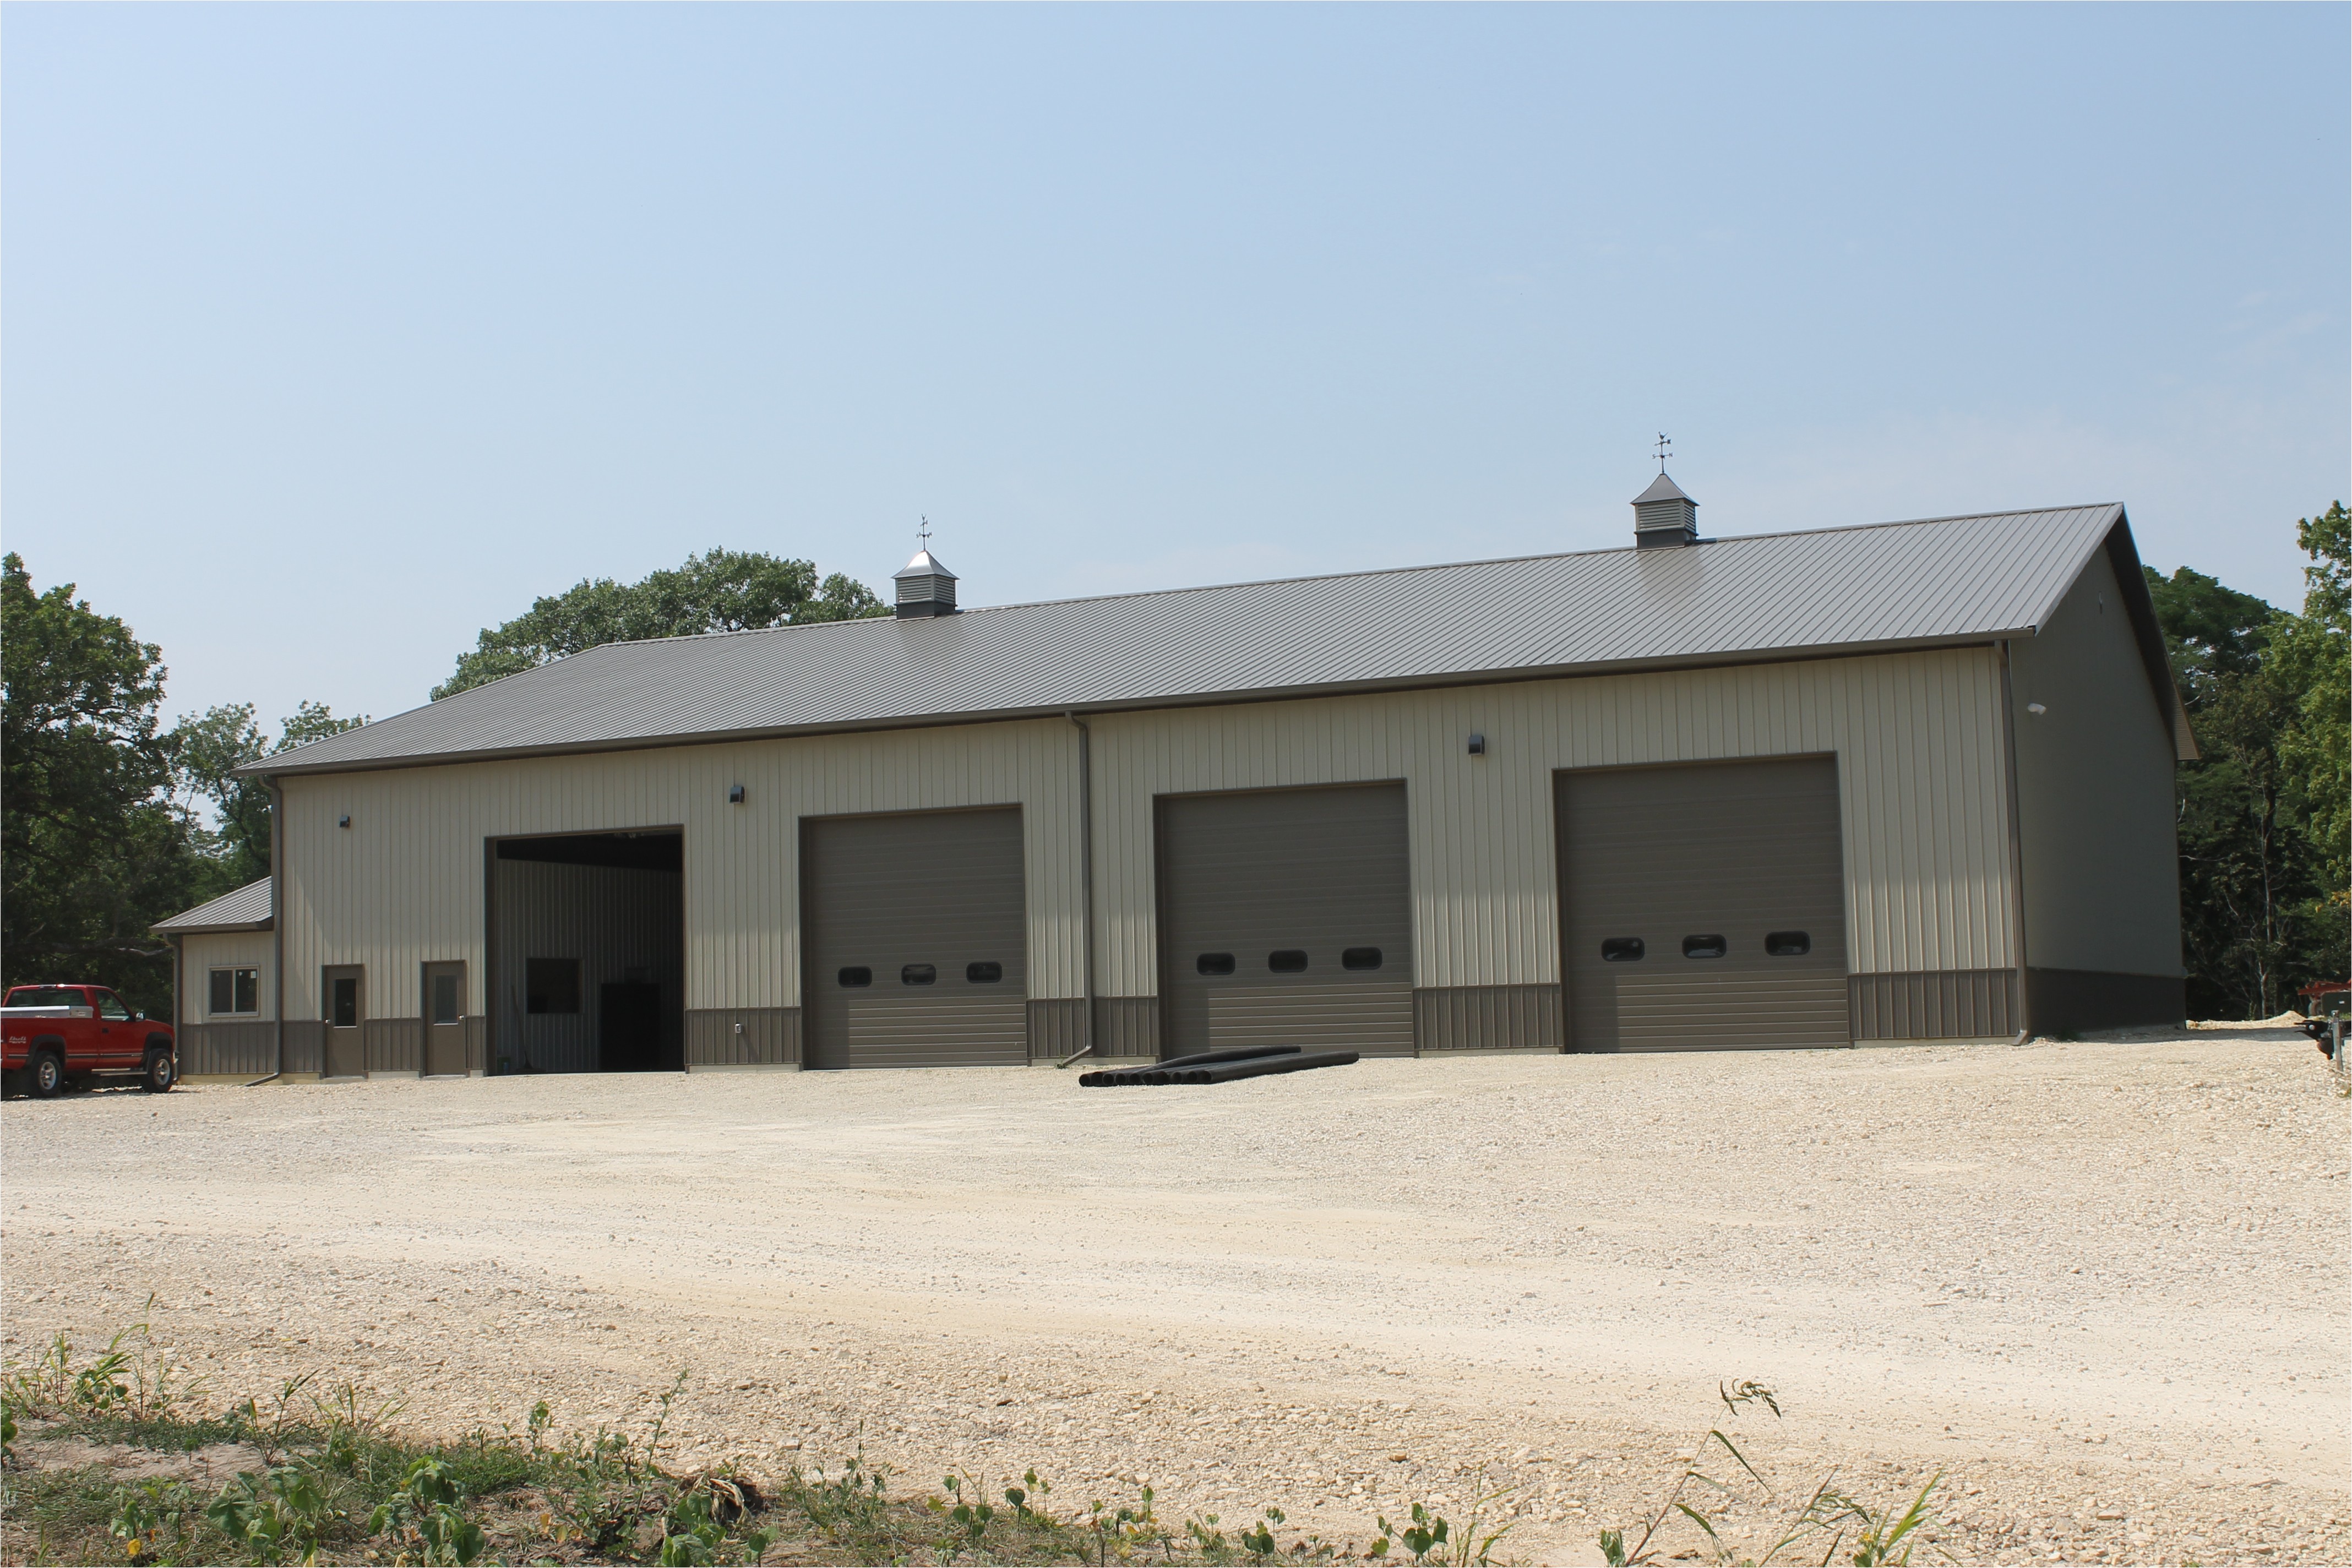 40x60 Pole Barn With Living Quarters Adinaporter